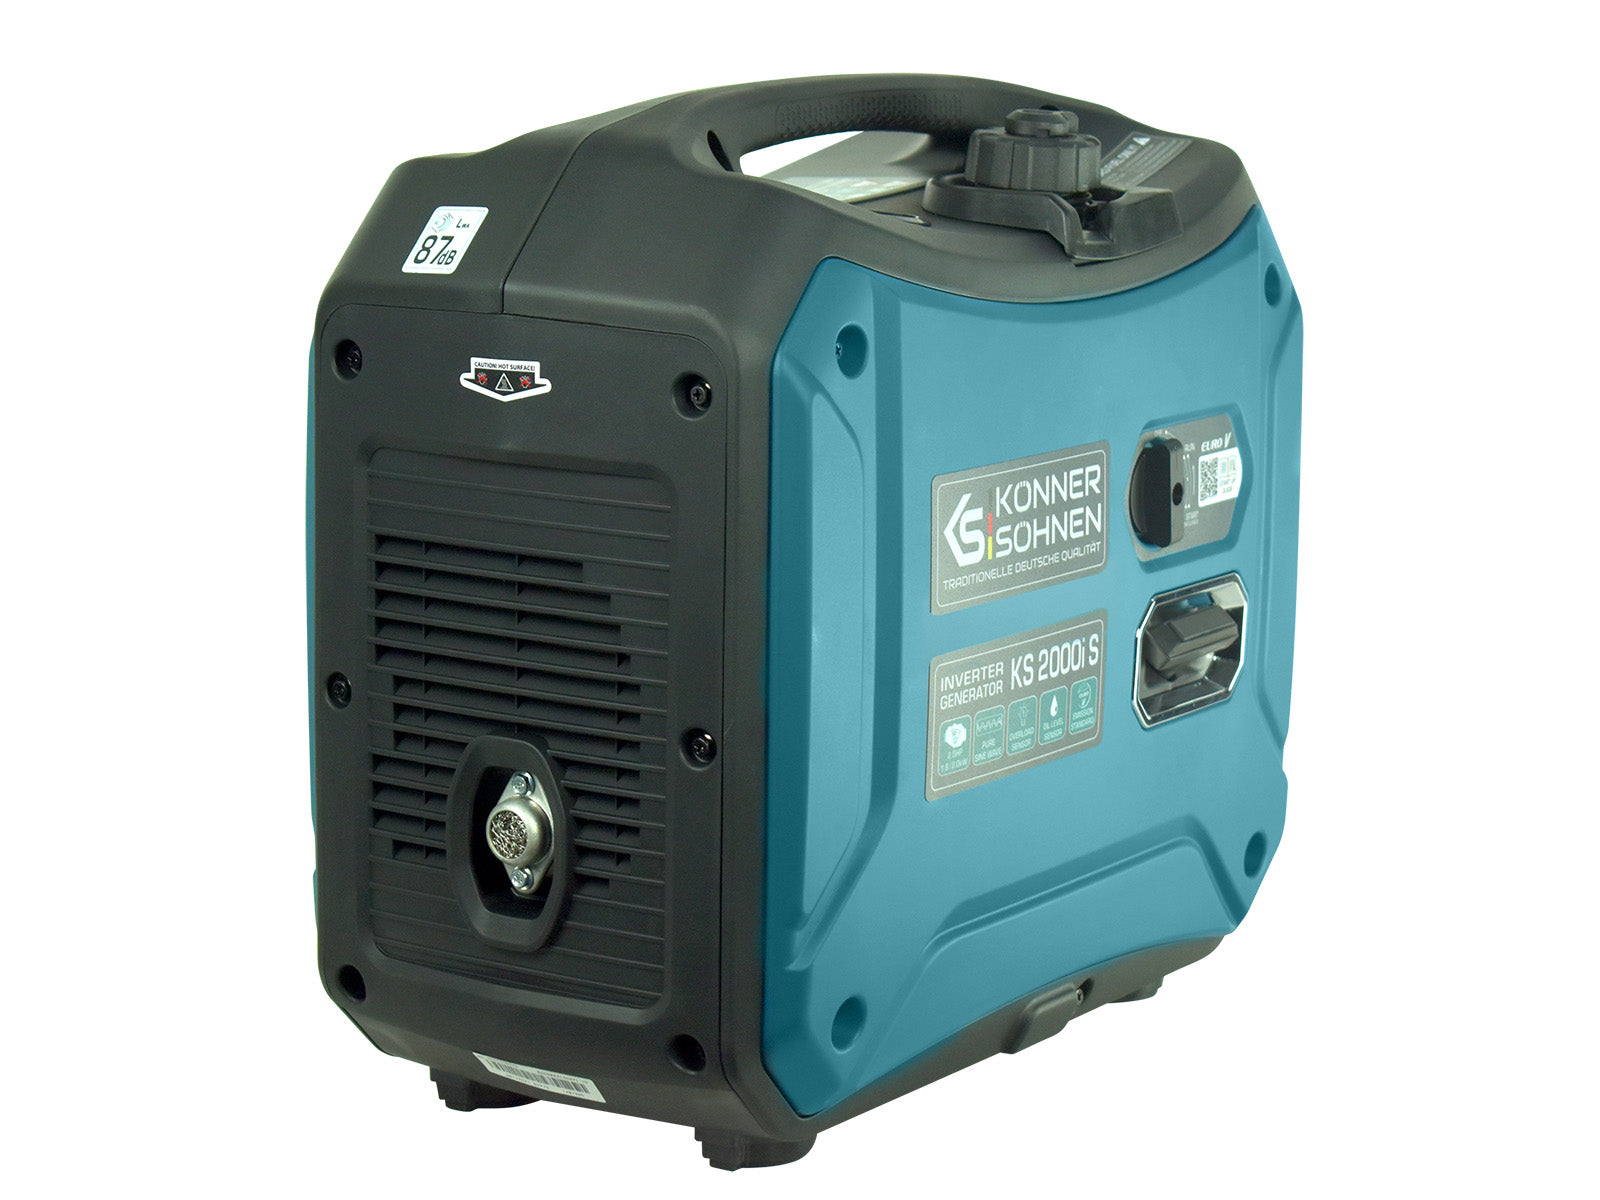 Inverter-Generator KS 2000i S